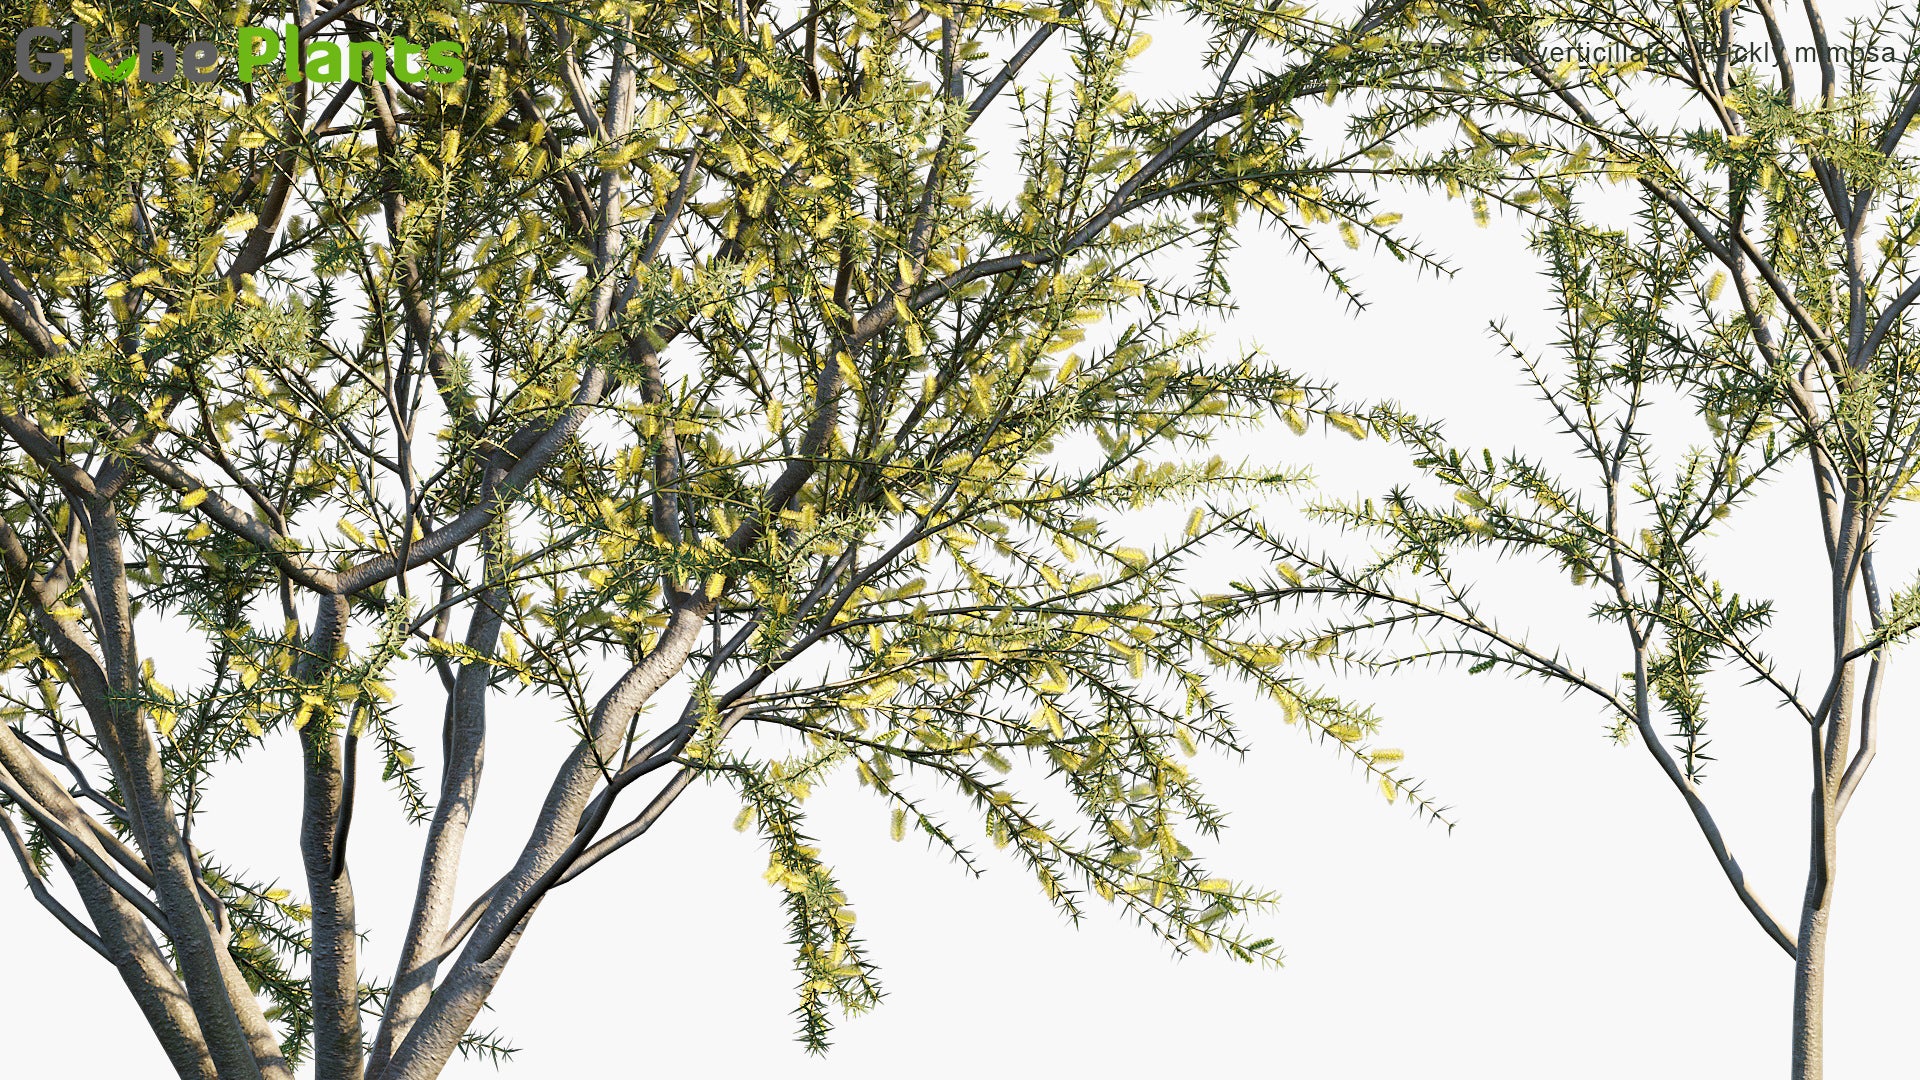 Acacia Verticillata - Prickly Moses, Prickly-Leaved Wattle, Star-Leaved Acacia, Prickly Mimosa, Whorl-Leaved Acacia